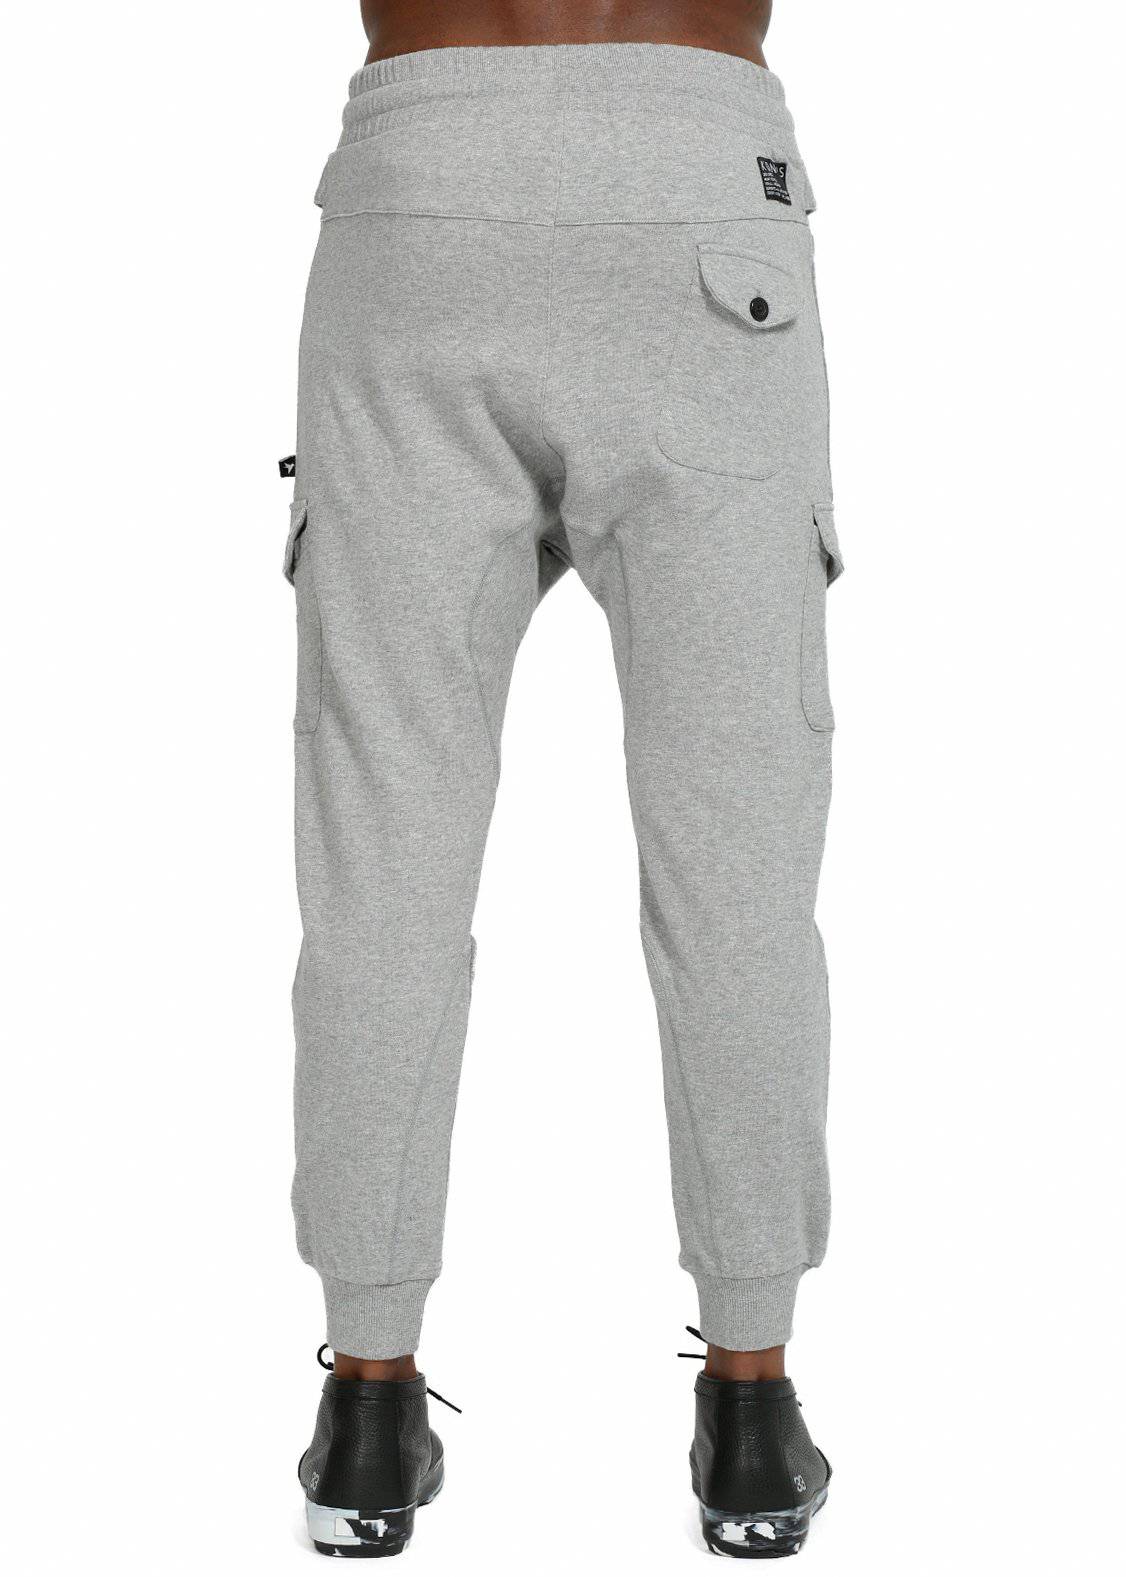 Konus Men's Drop Crotch Cargo Pockets Sweatpants in Gray by Shop at Konus